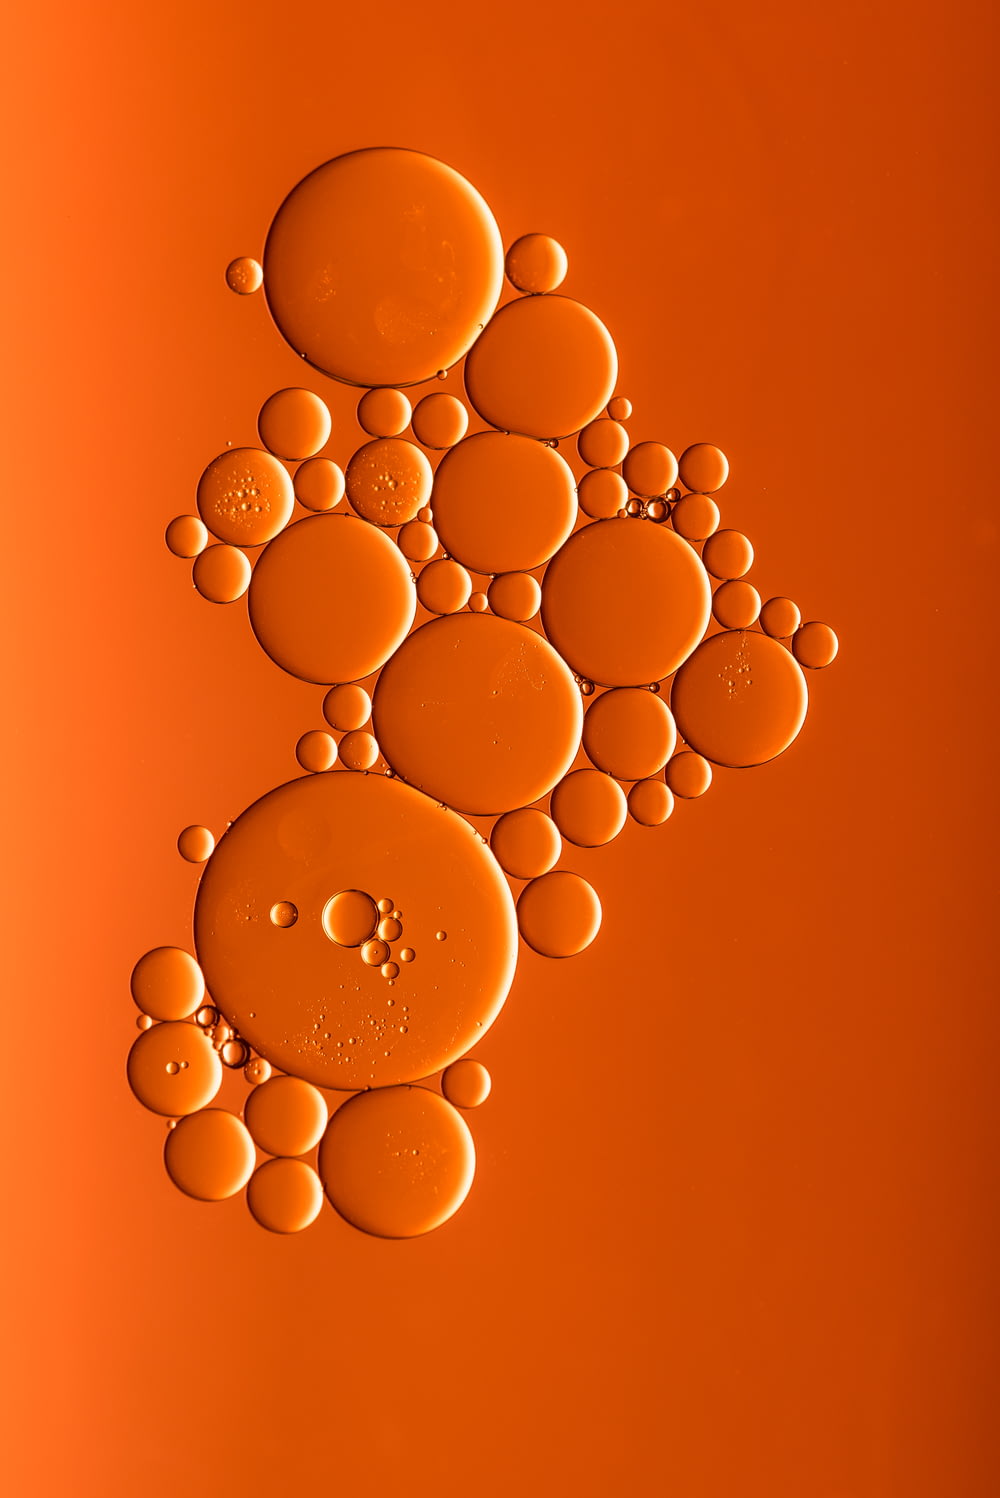 arte de bolhas laranjas